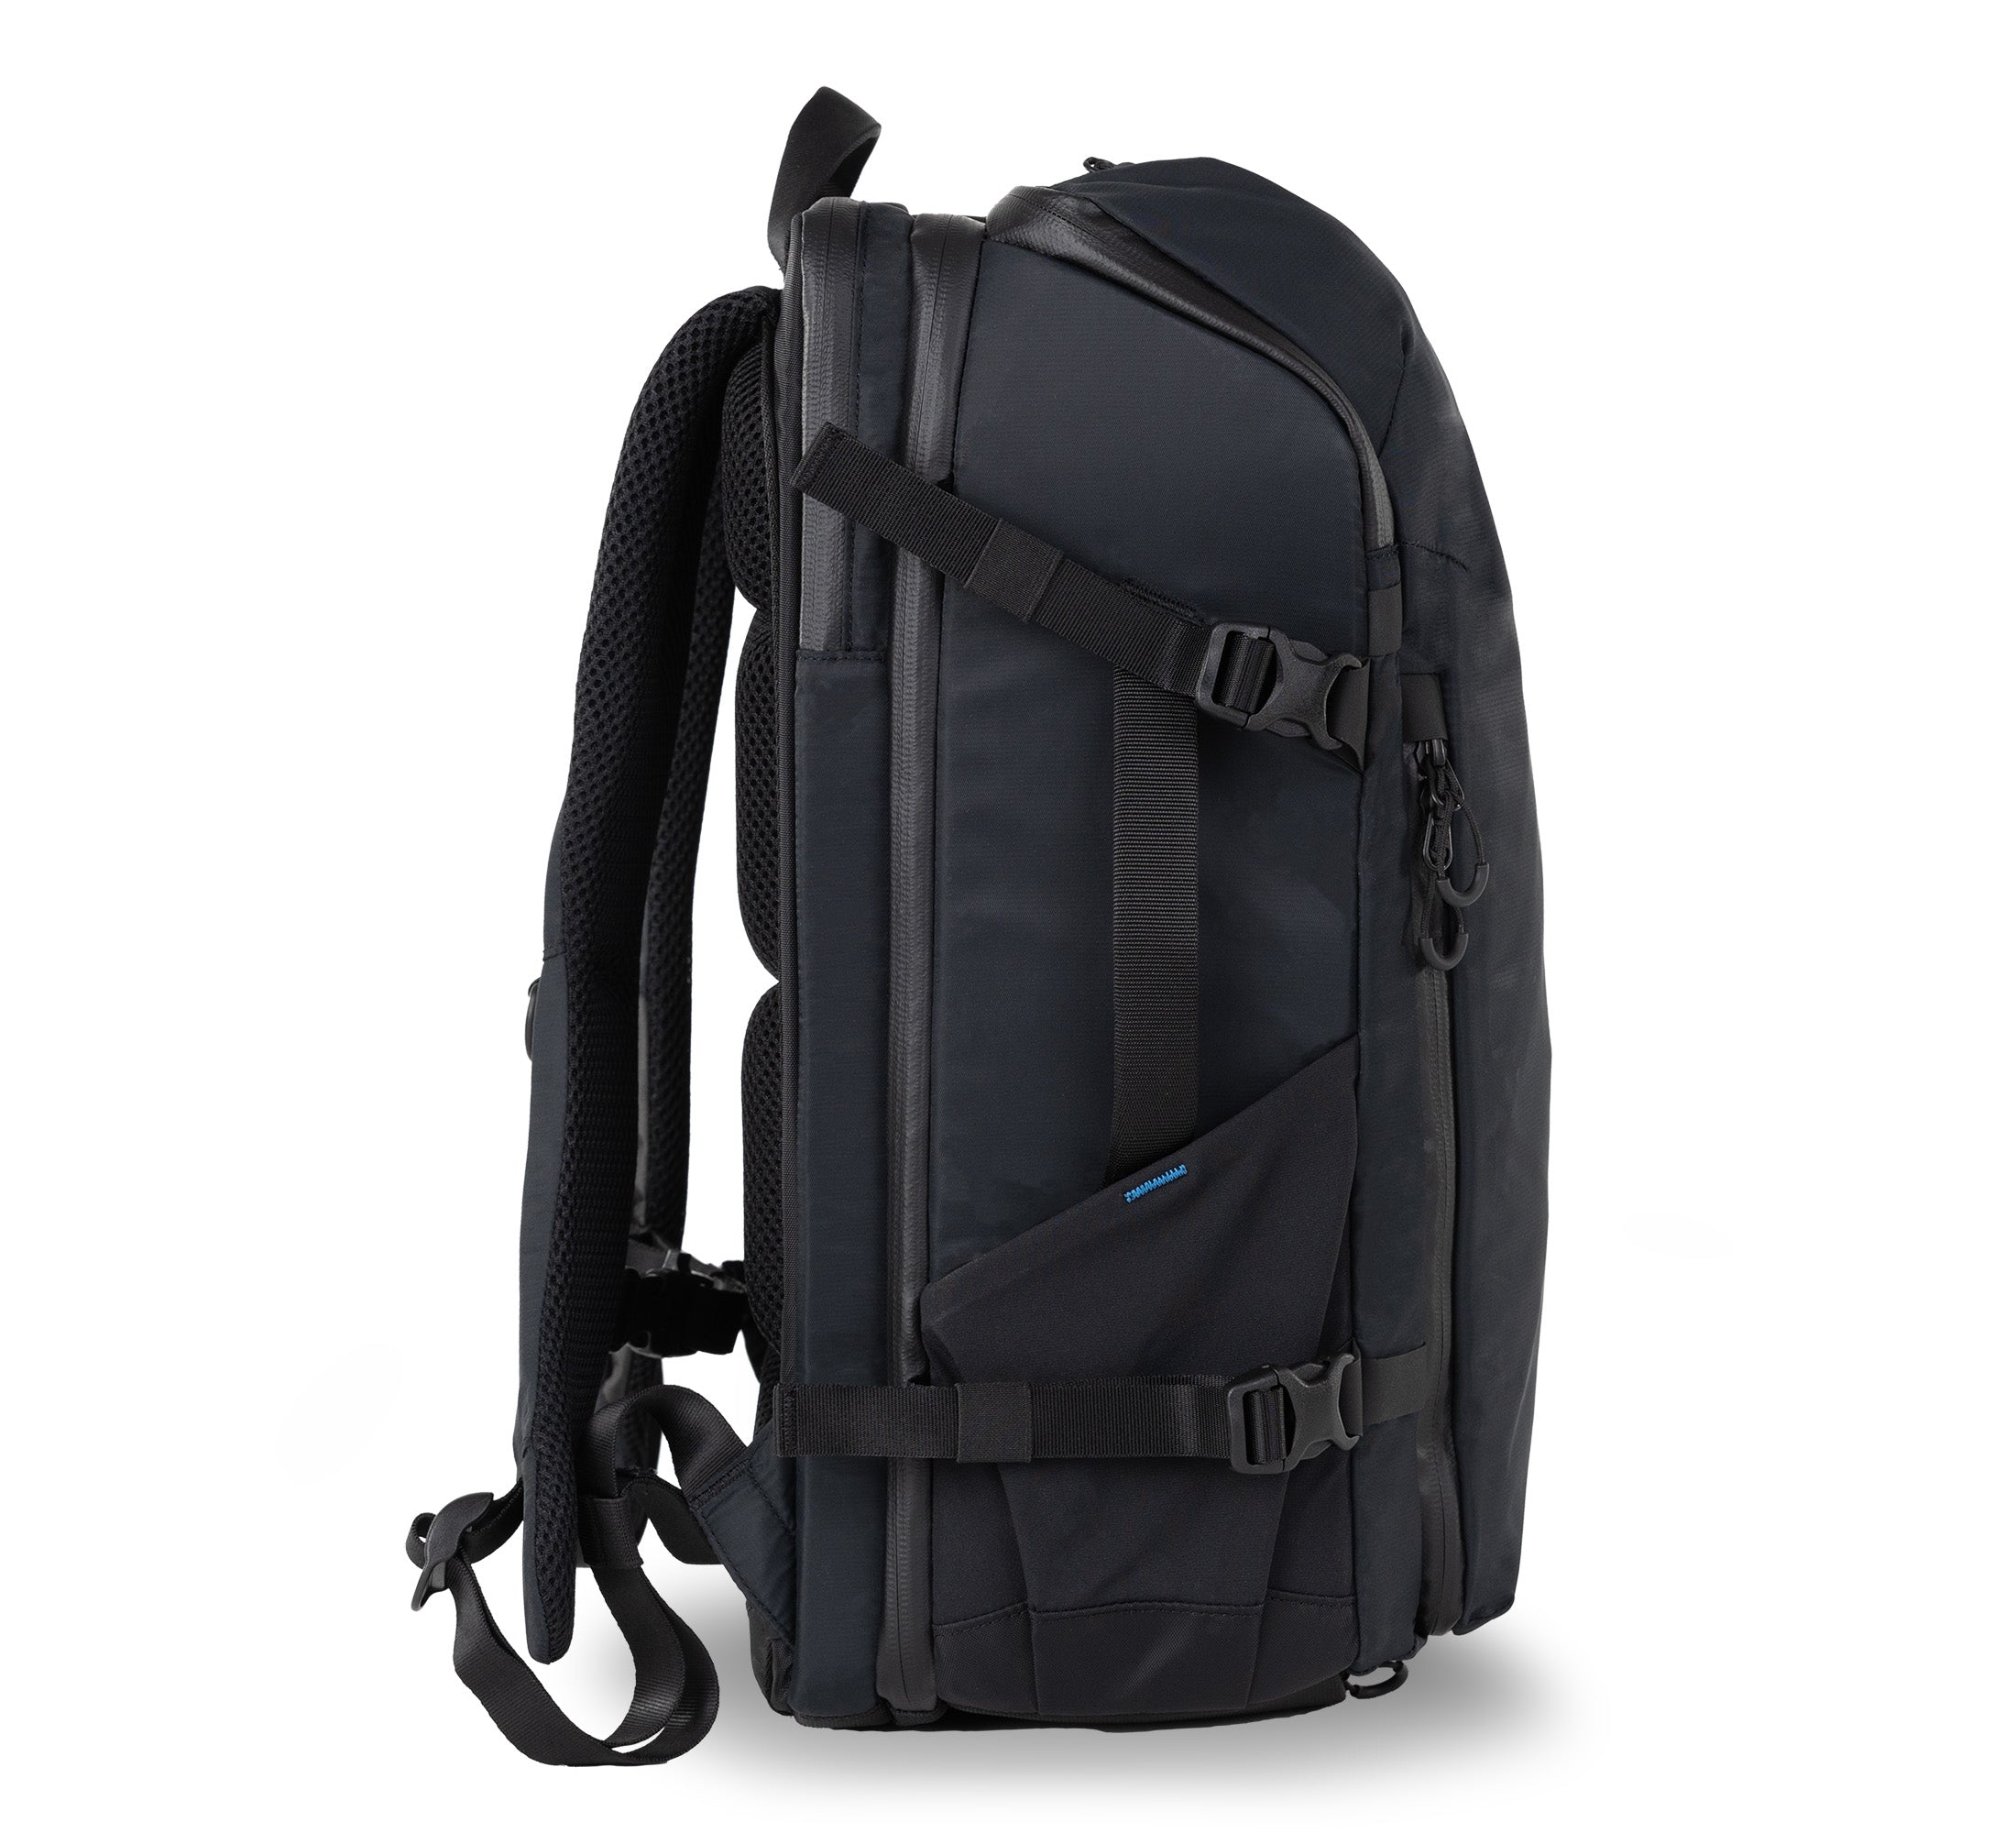 Adapt backpack 25L - Nur Rucksack